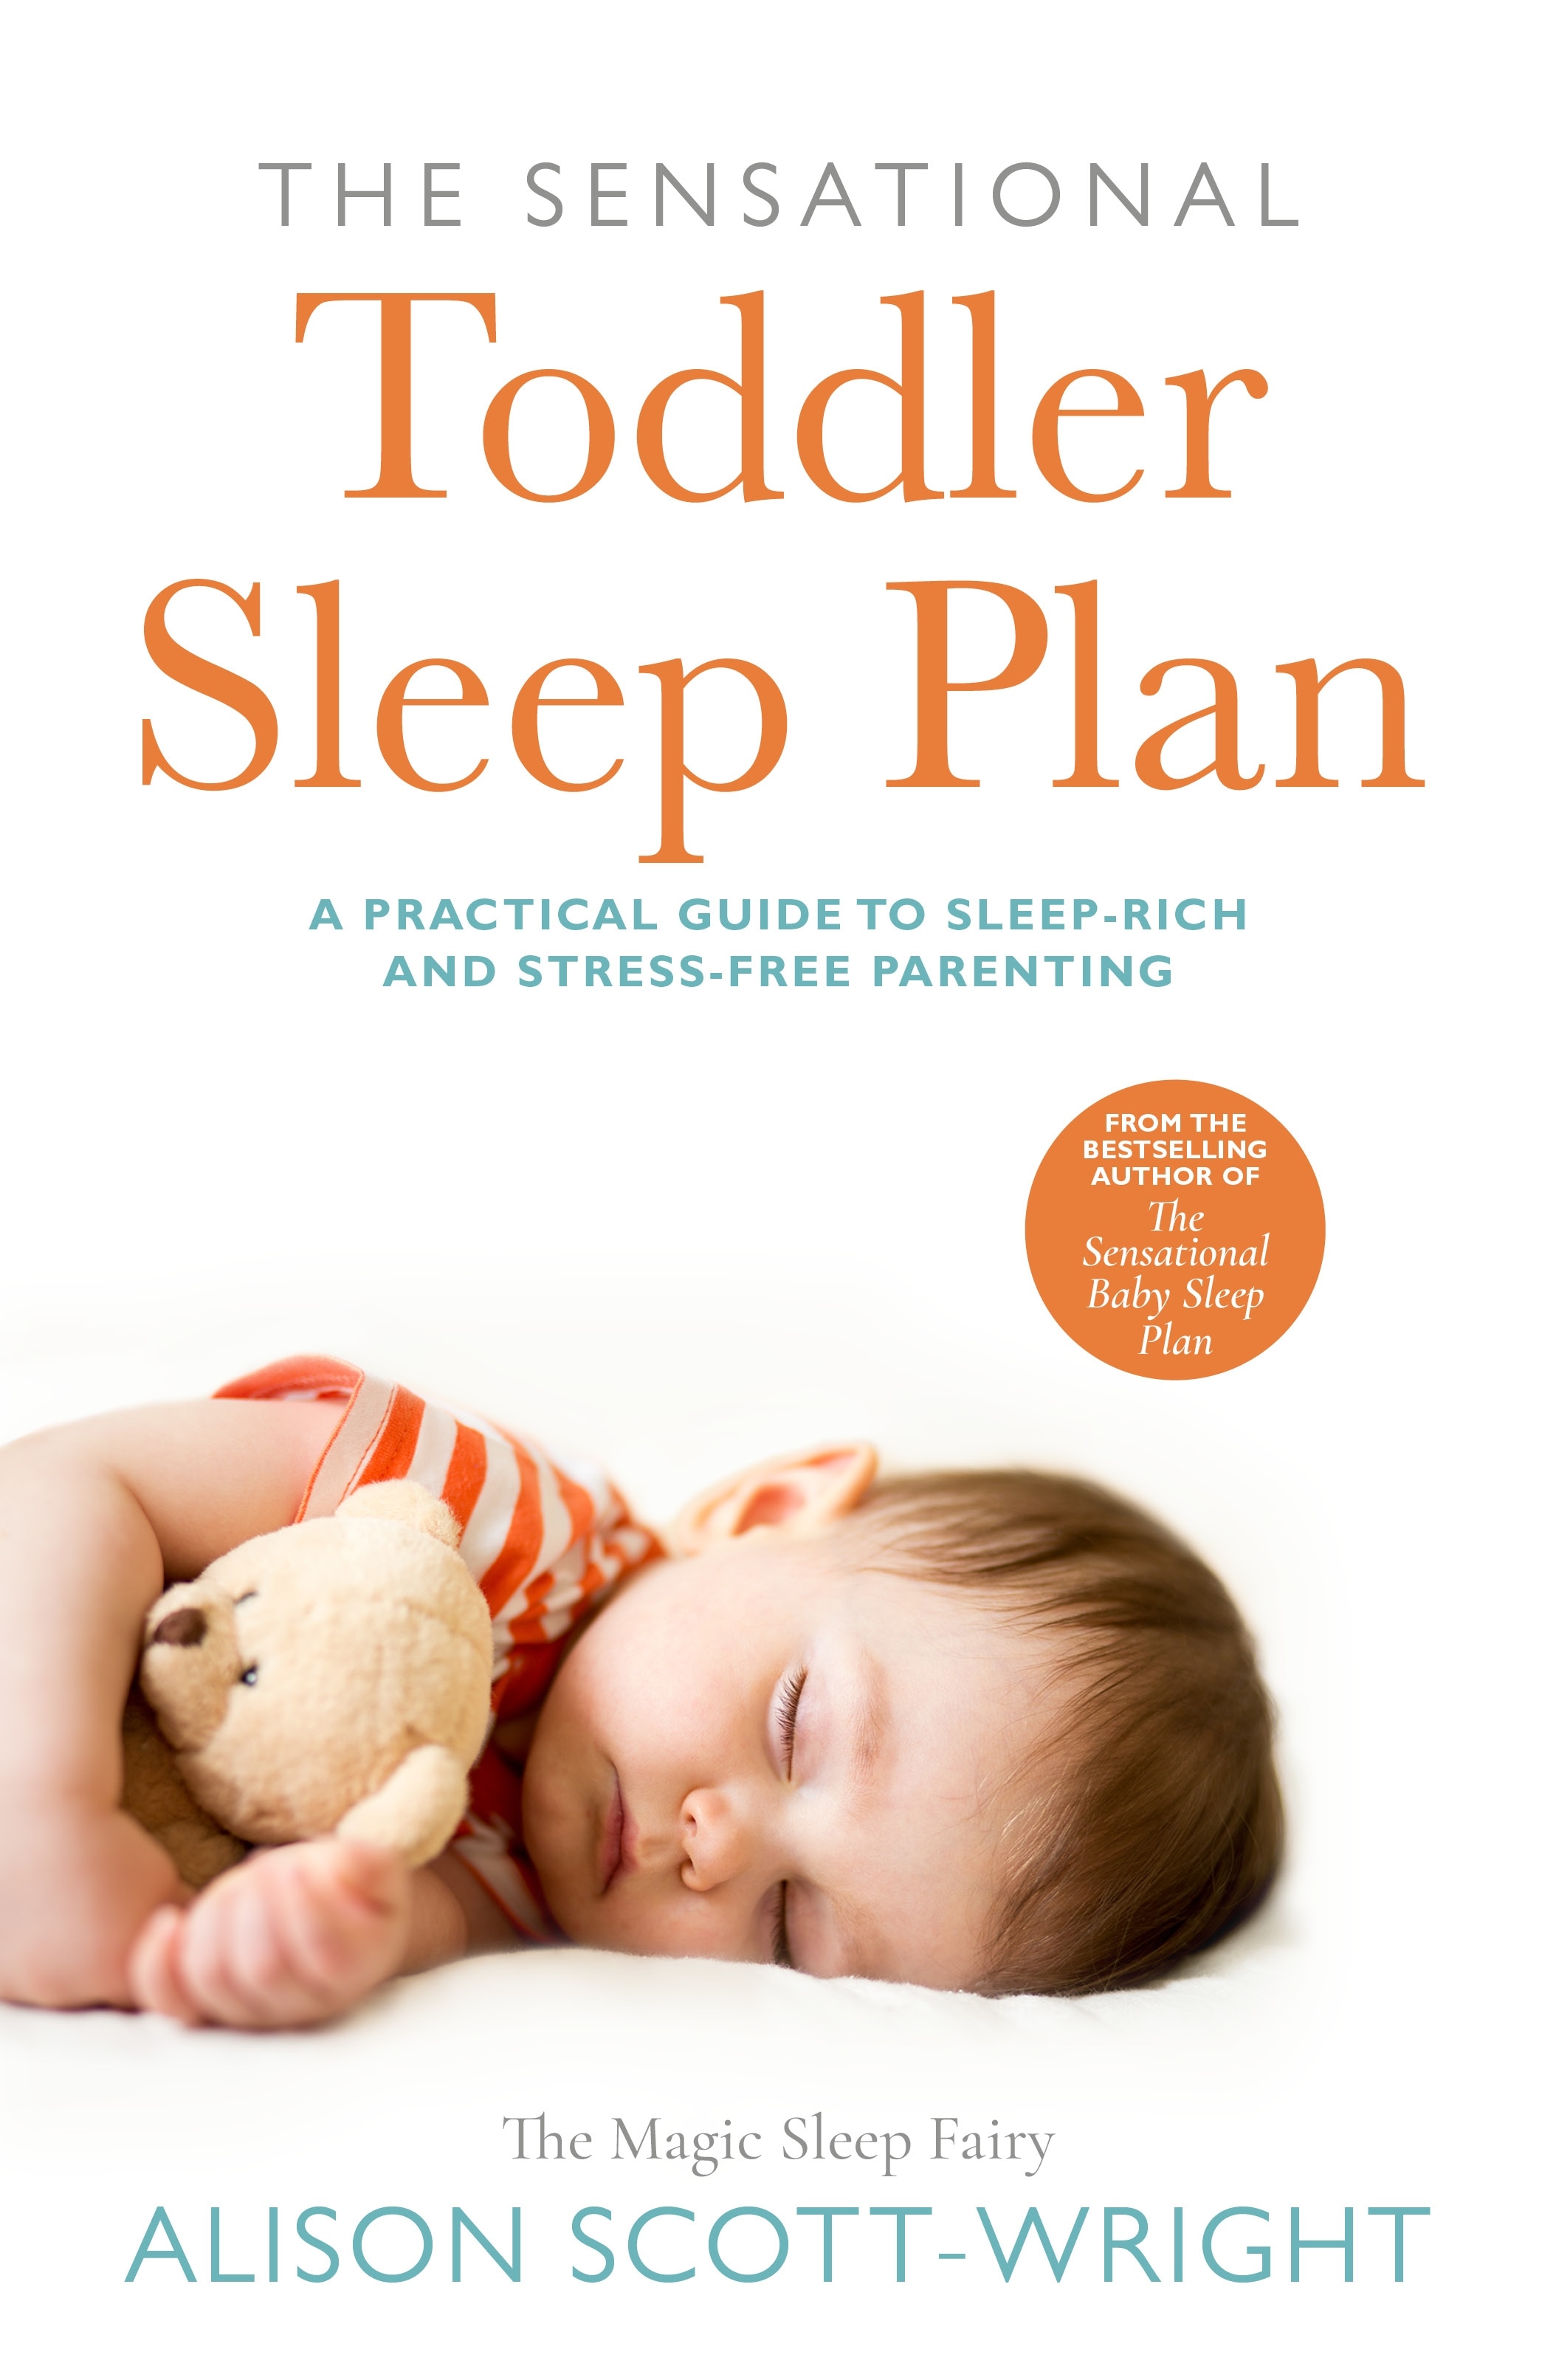 Book “The Sensational Toddler Sleep Plan” by Alison Scott-Wright — August 12, 2021